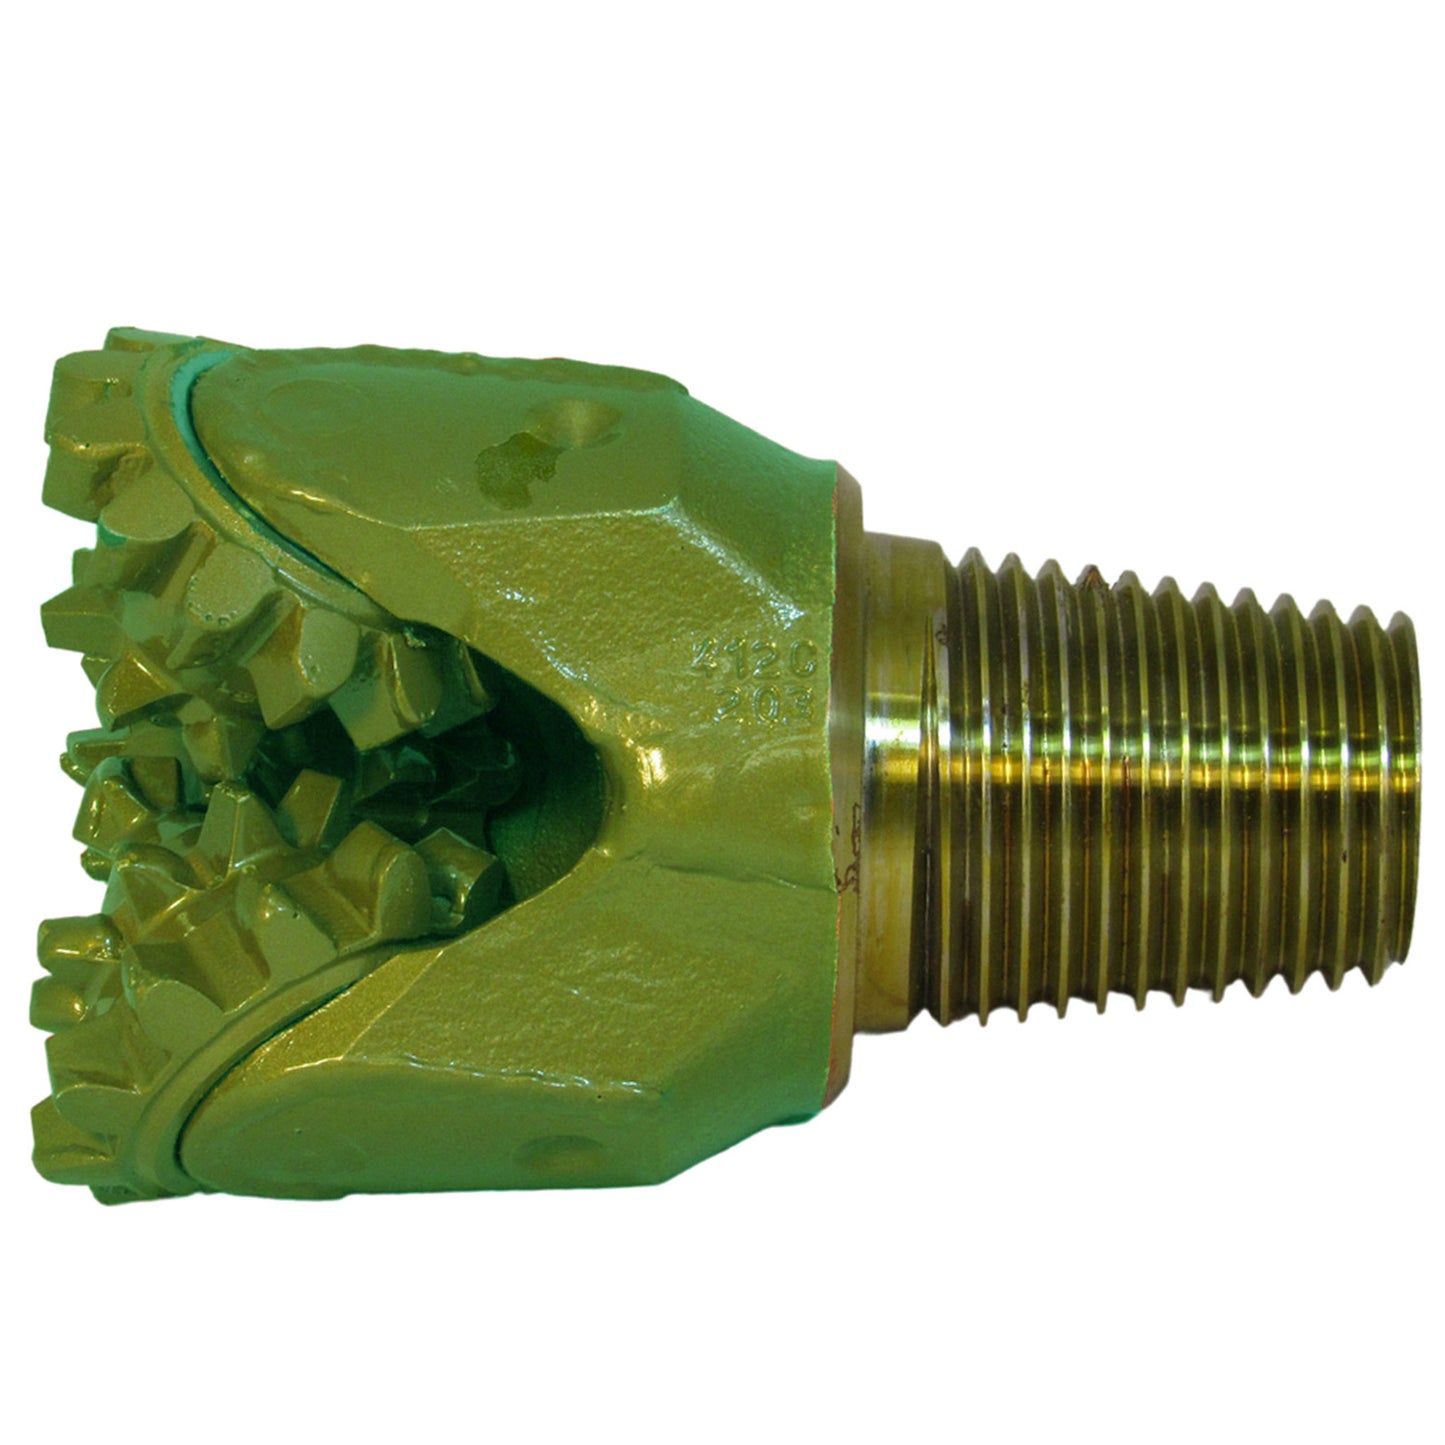 IADC 211 Rock Bit 4 ½" Steel Tooth - 2 ⅜" Reg Pin